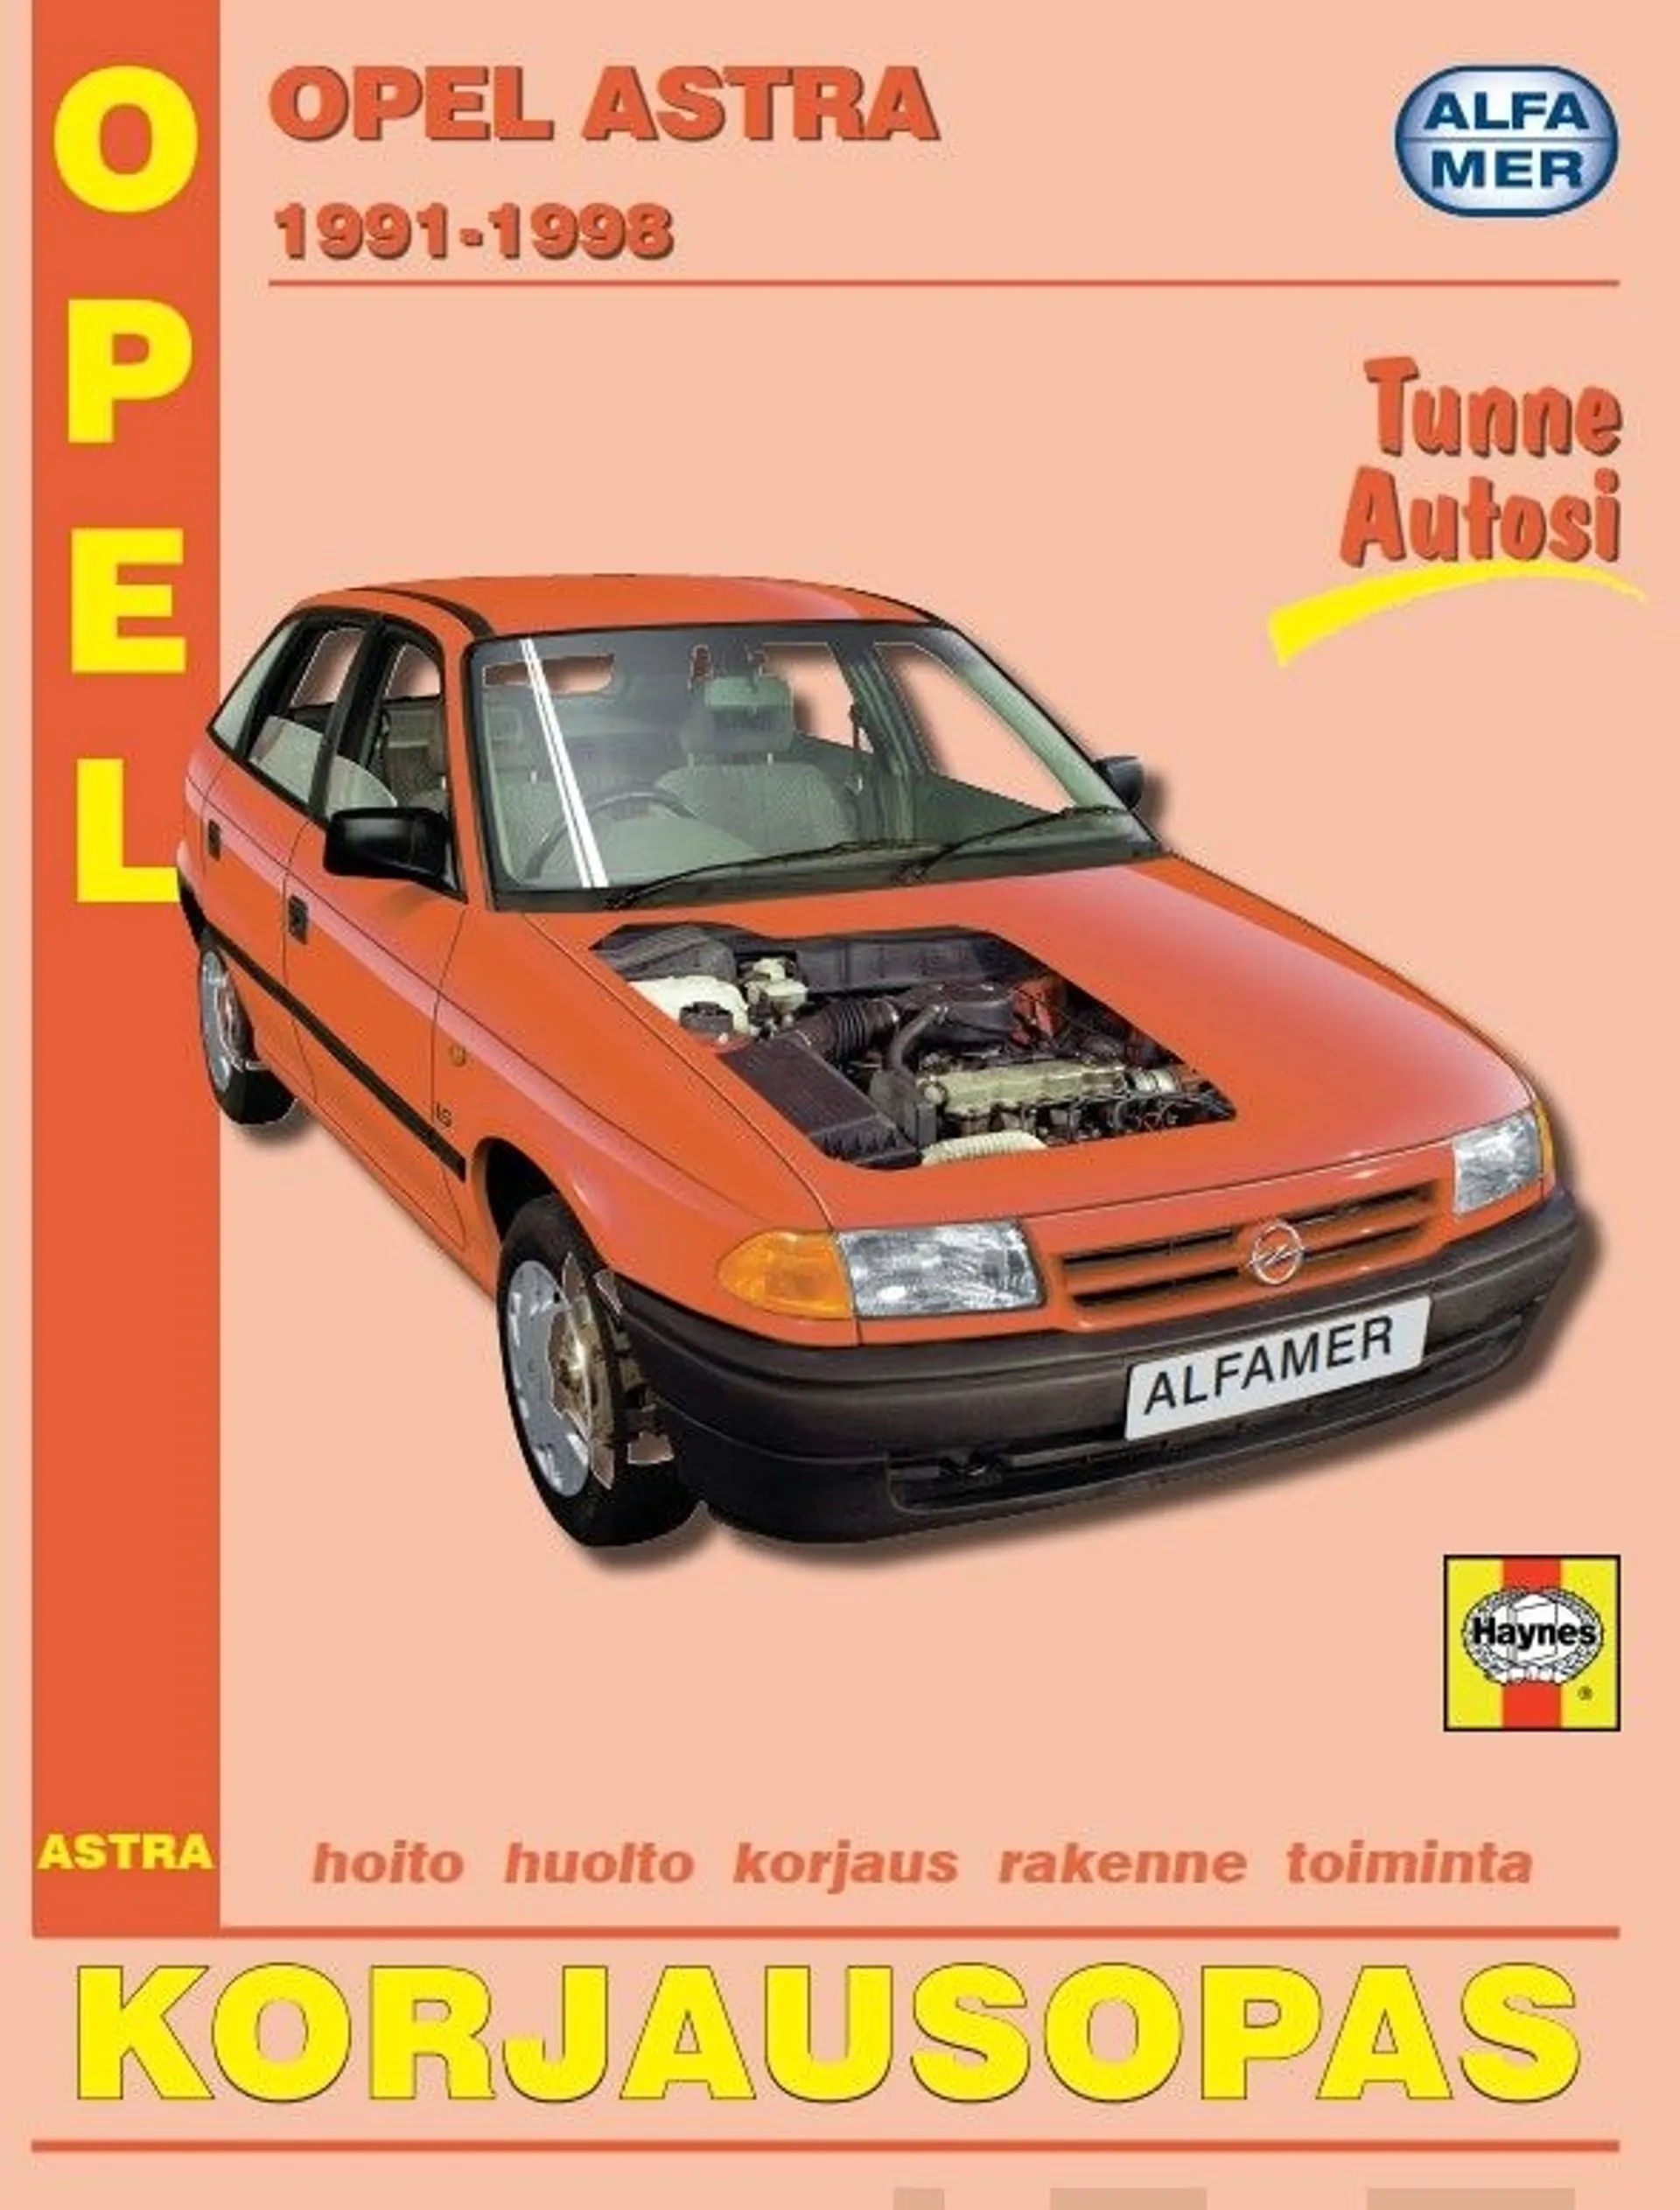 Mauno, Opel Astra 1991-1998